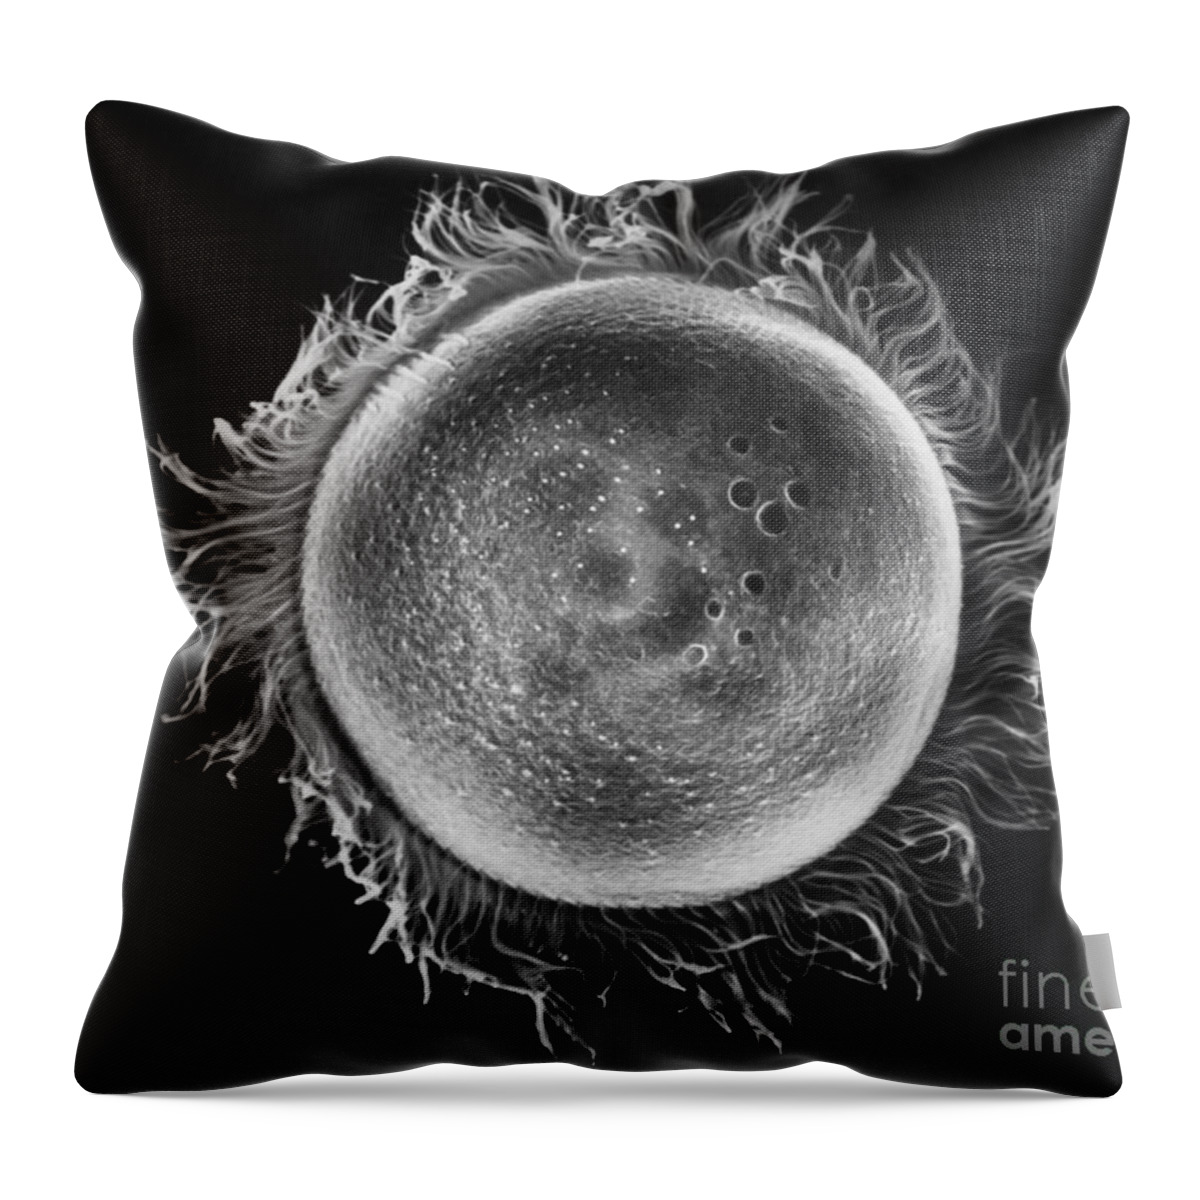 B&w Throw Pillow featuring the photograph Didinium Nasutum Ciliate Sem by Greg Antipa